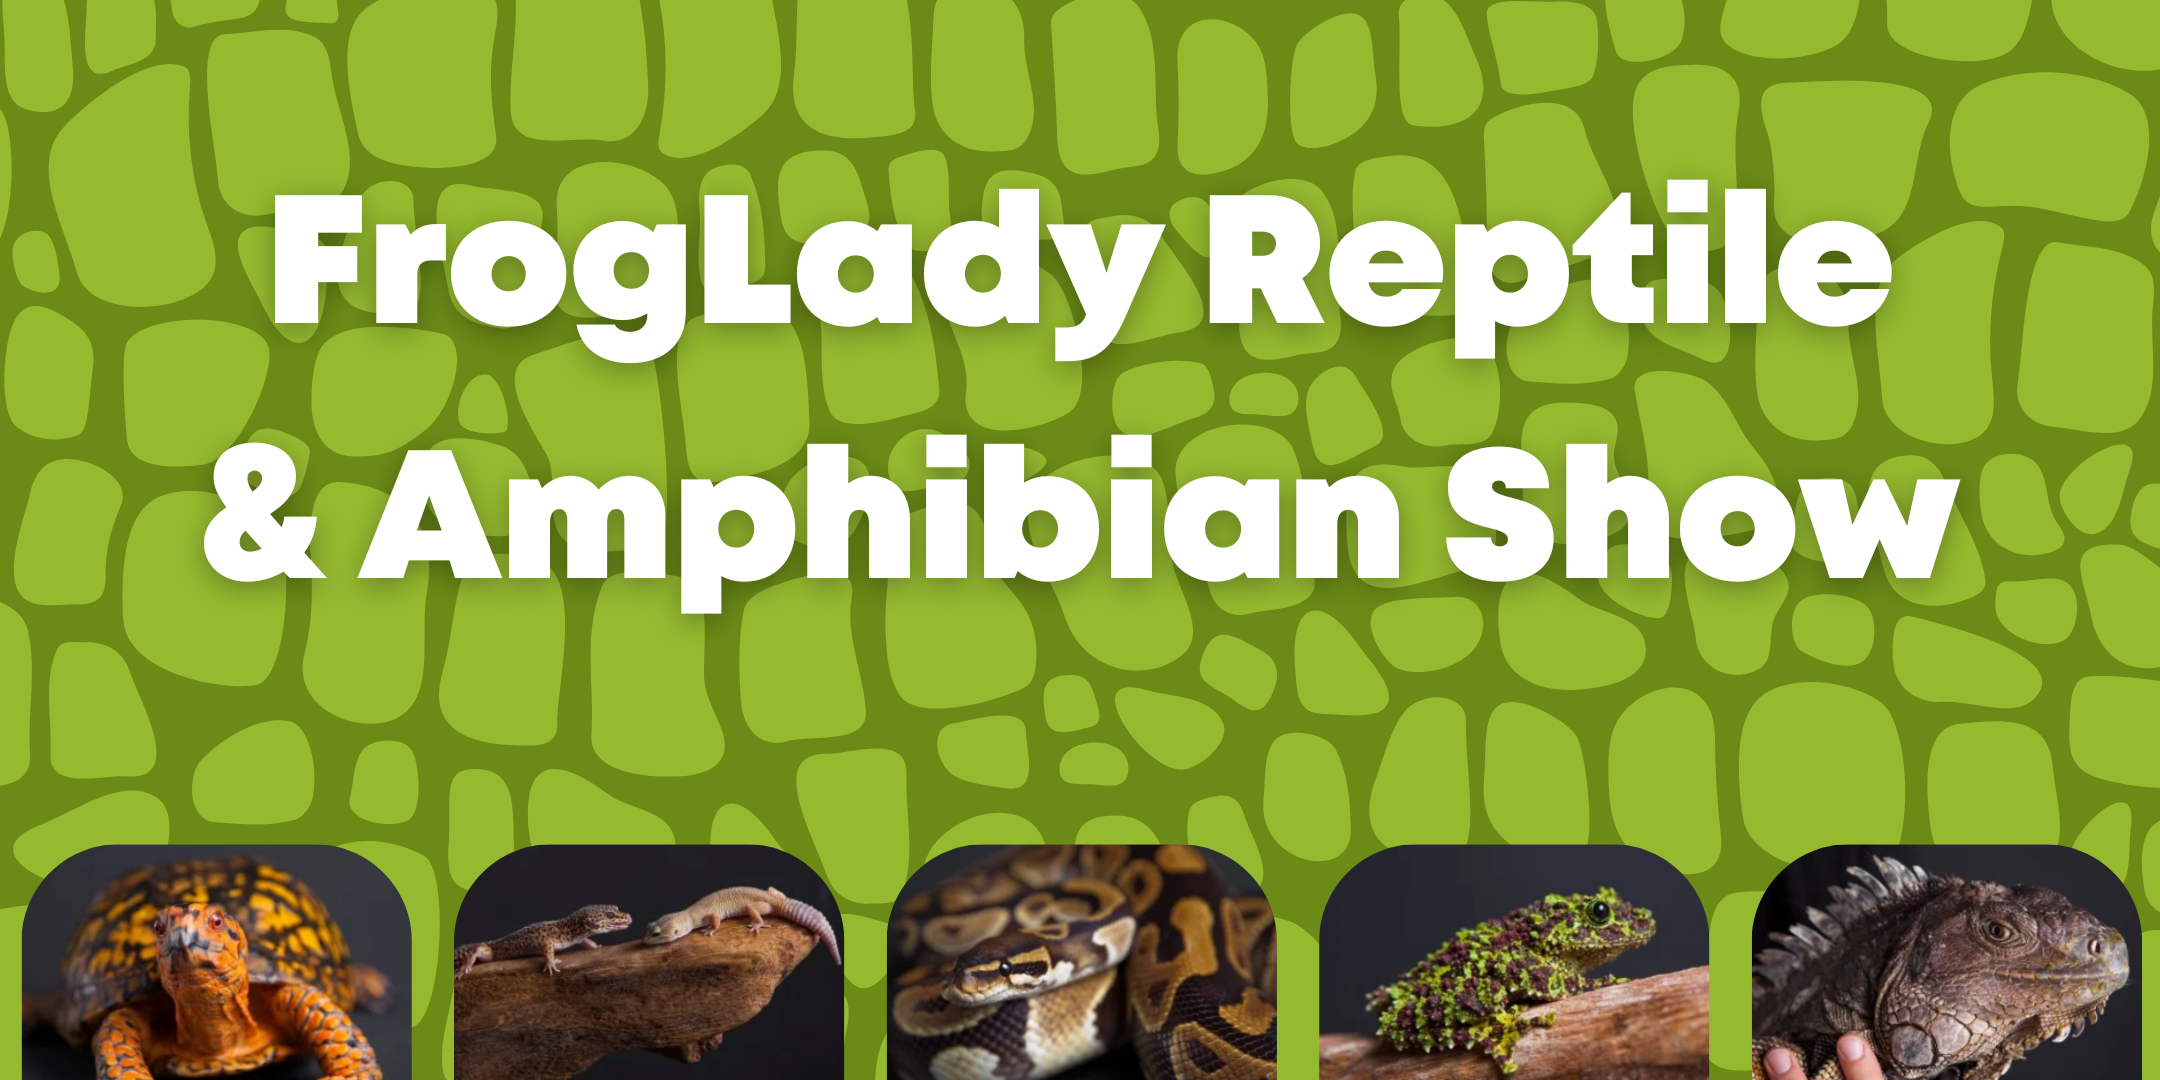 image of "FrogLady Reptile & Amphibian Show"